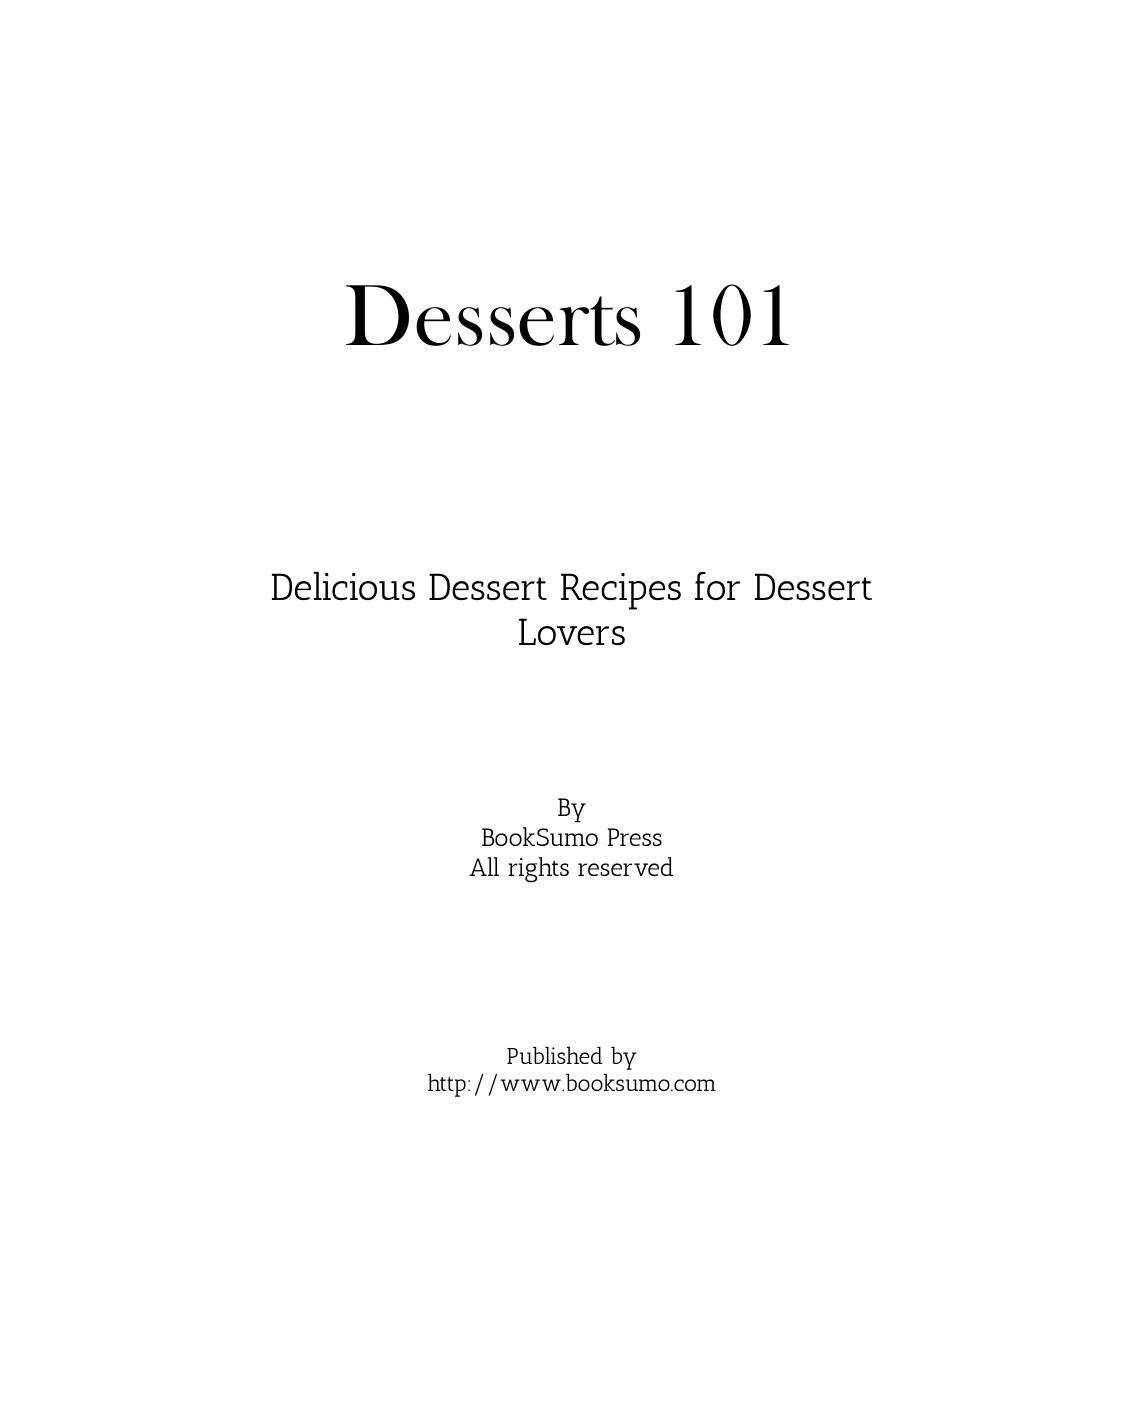 Desserts 101: Delicious Dessert Recipes for Dessert Lovers by BookSumo Press